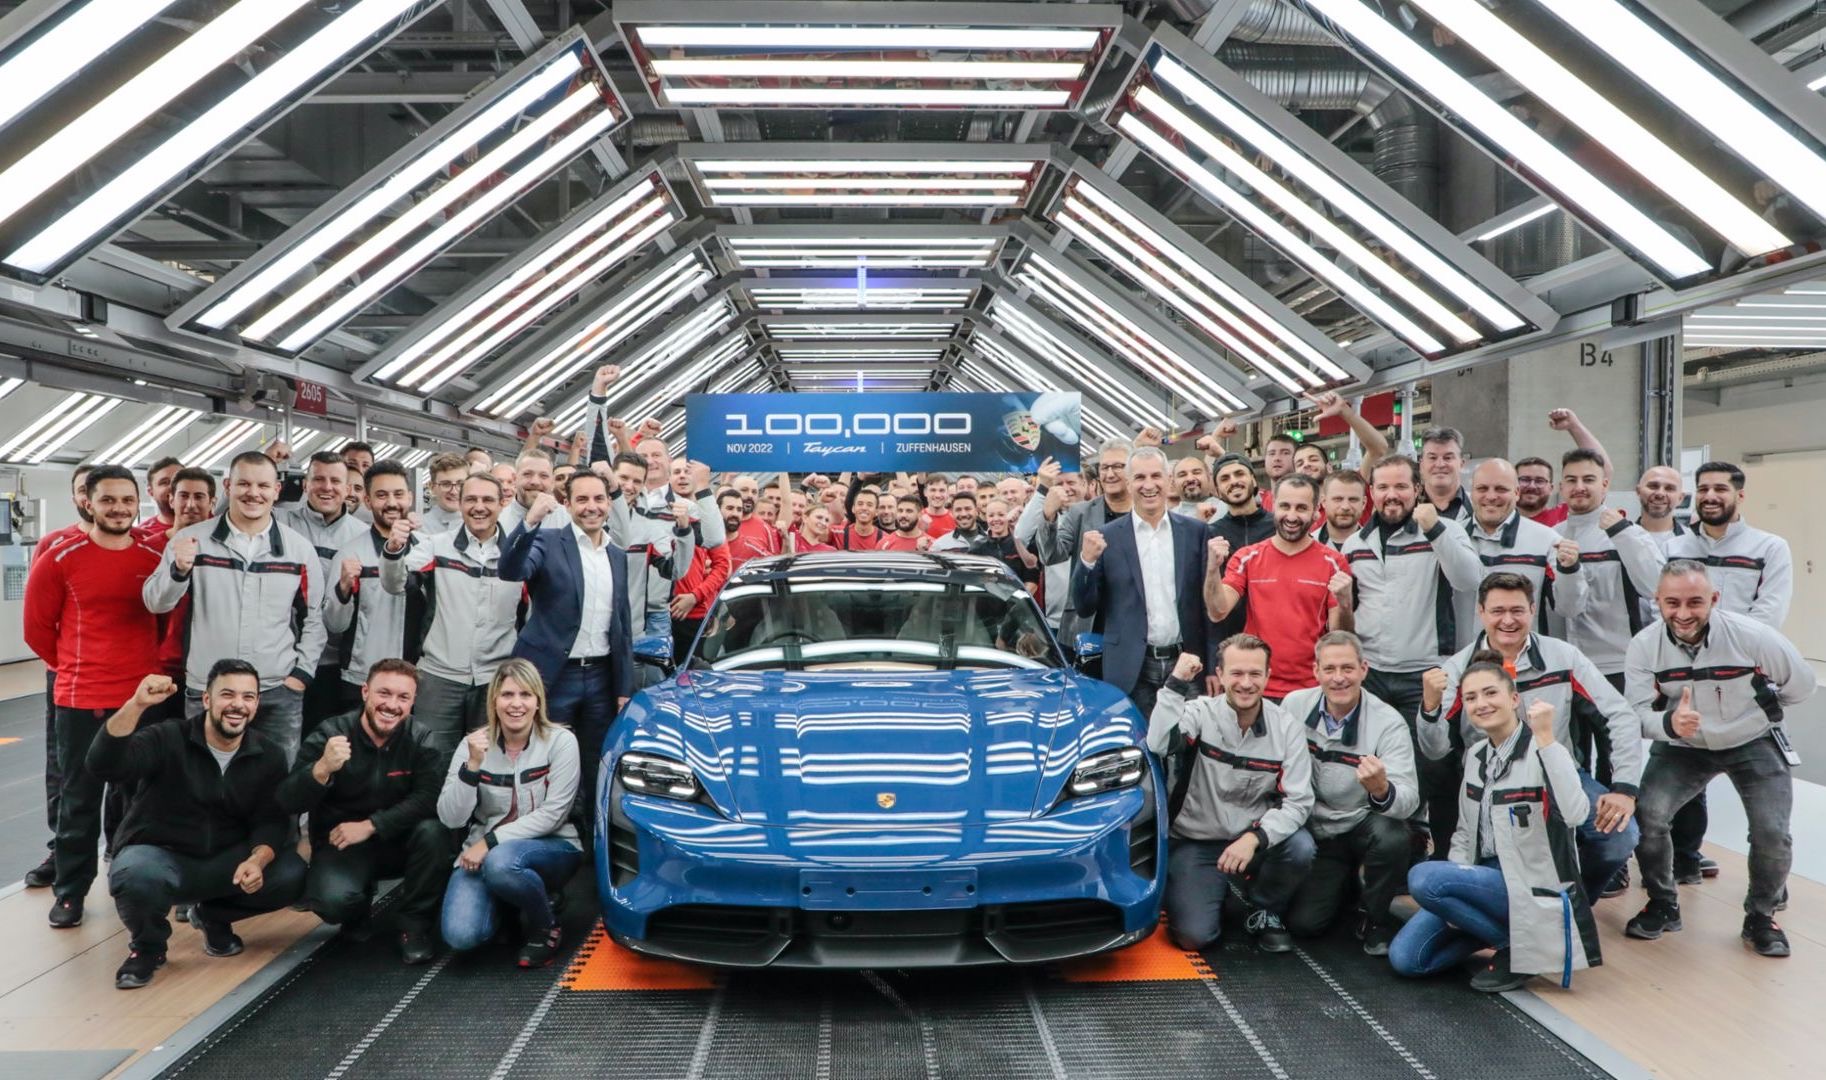 Porsche Taycan production hits 100,000 units milestone